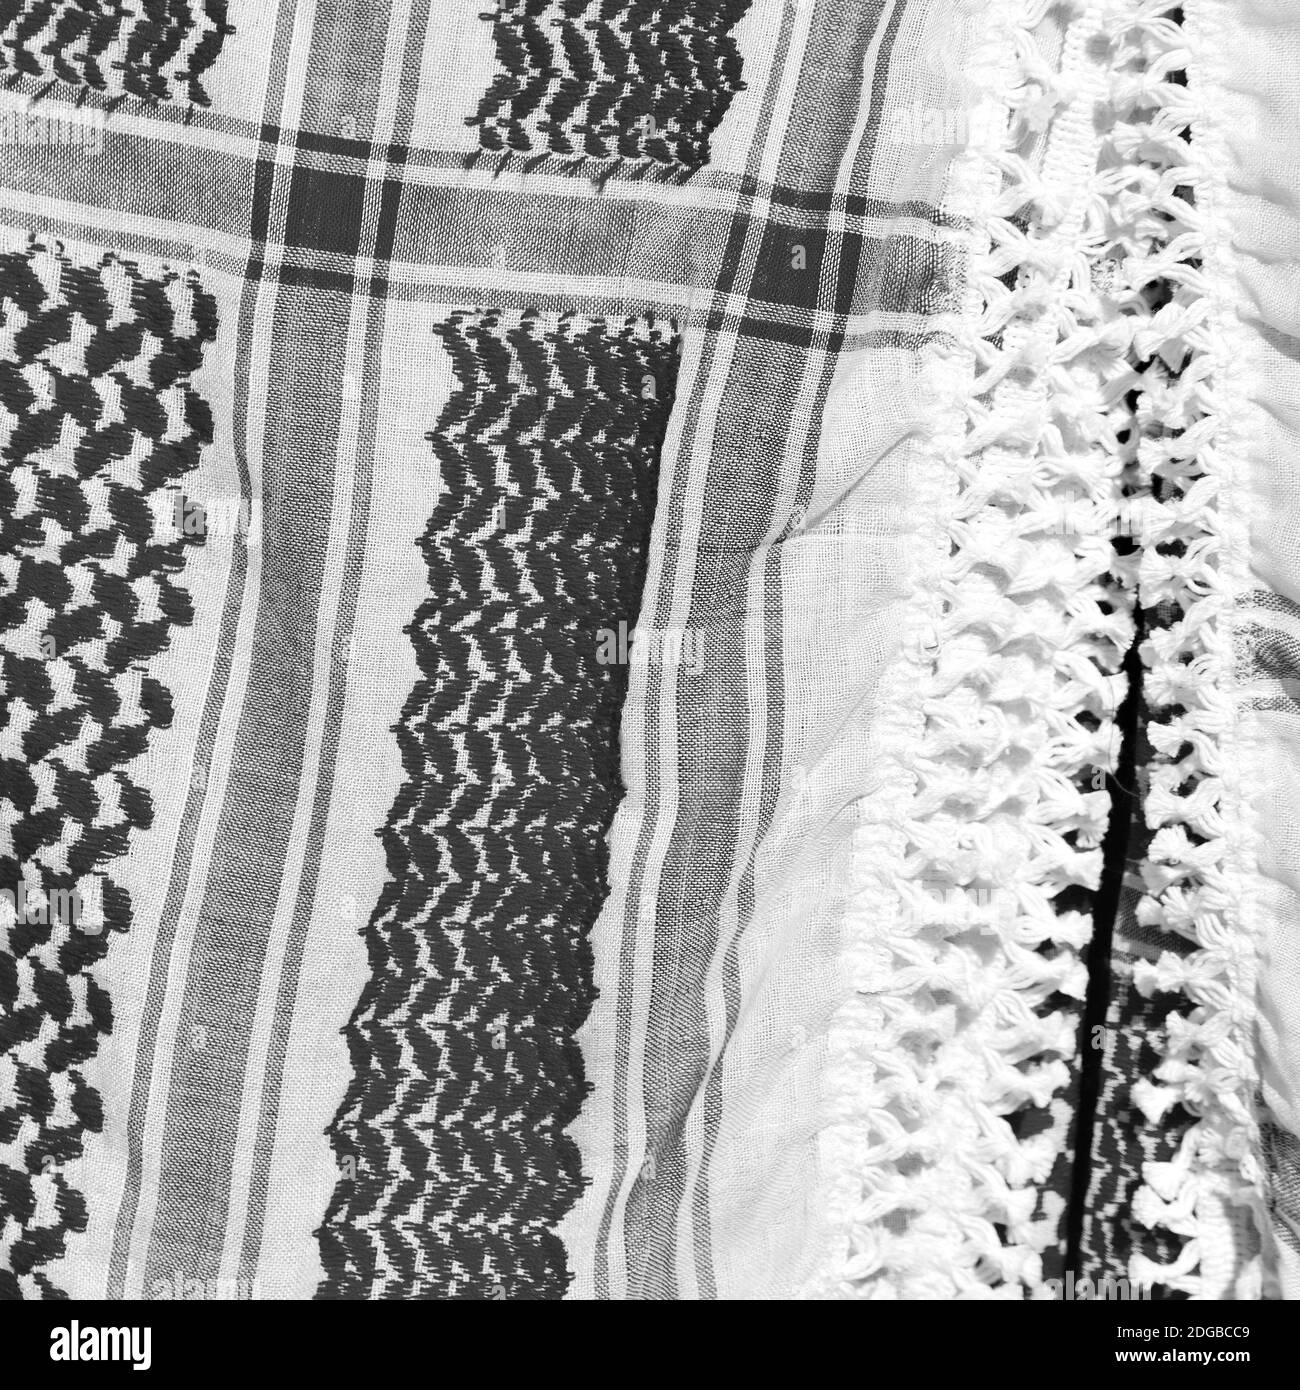 Background Texture, Pattern. Scarf Wool Like Yasir Arafat. The